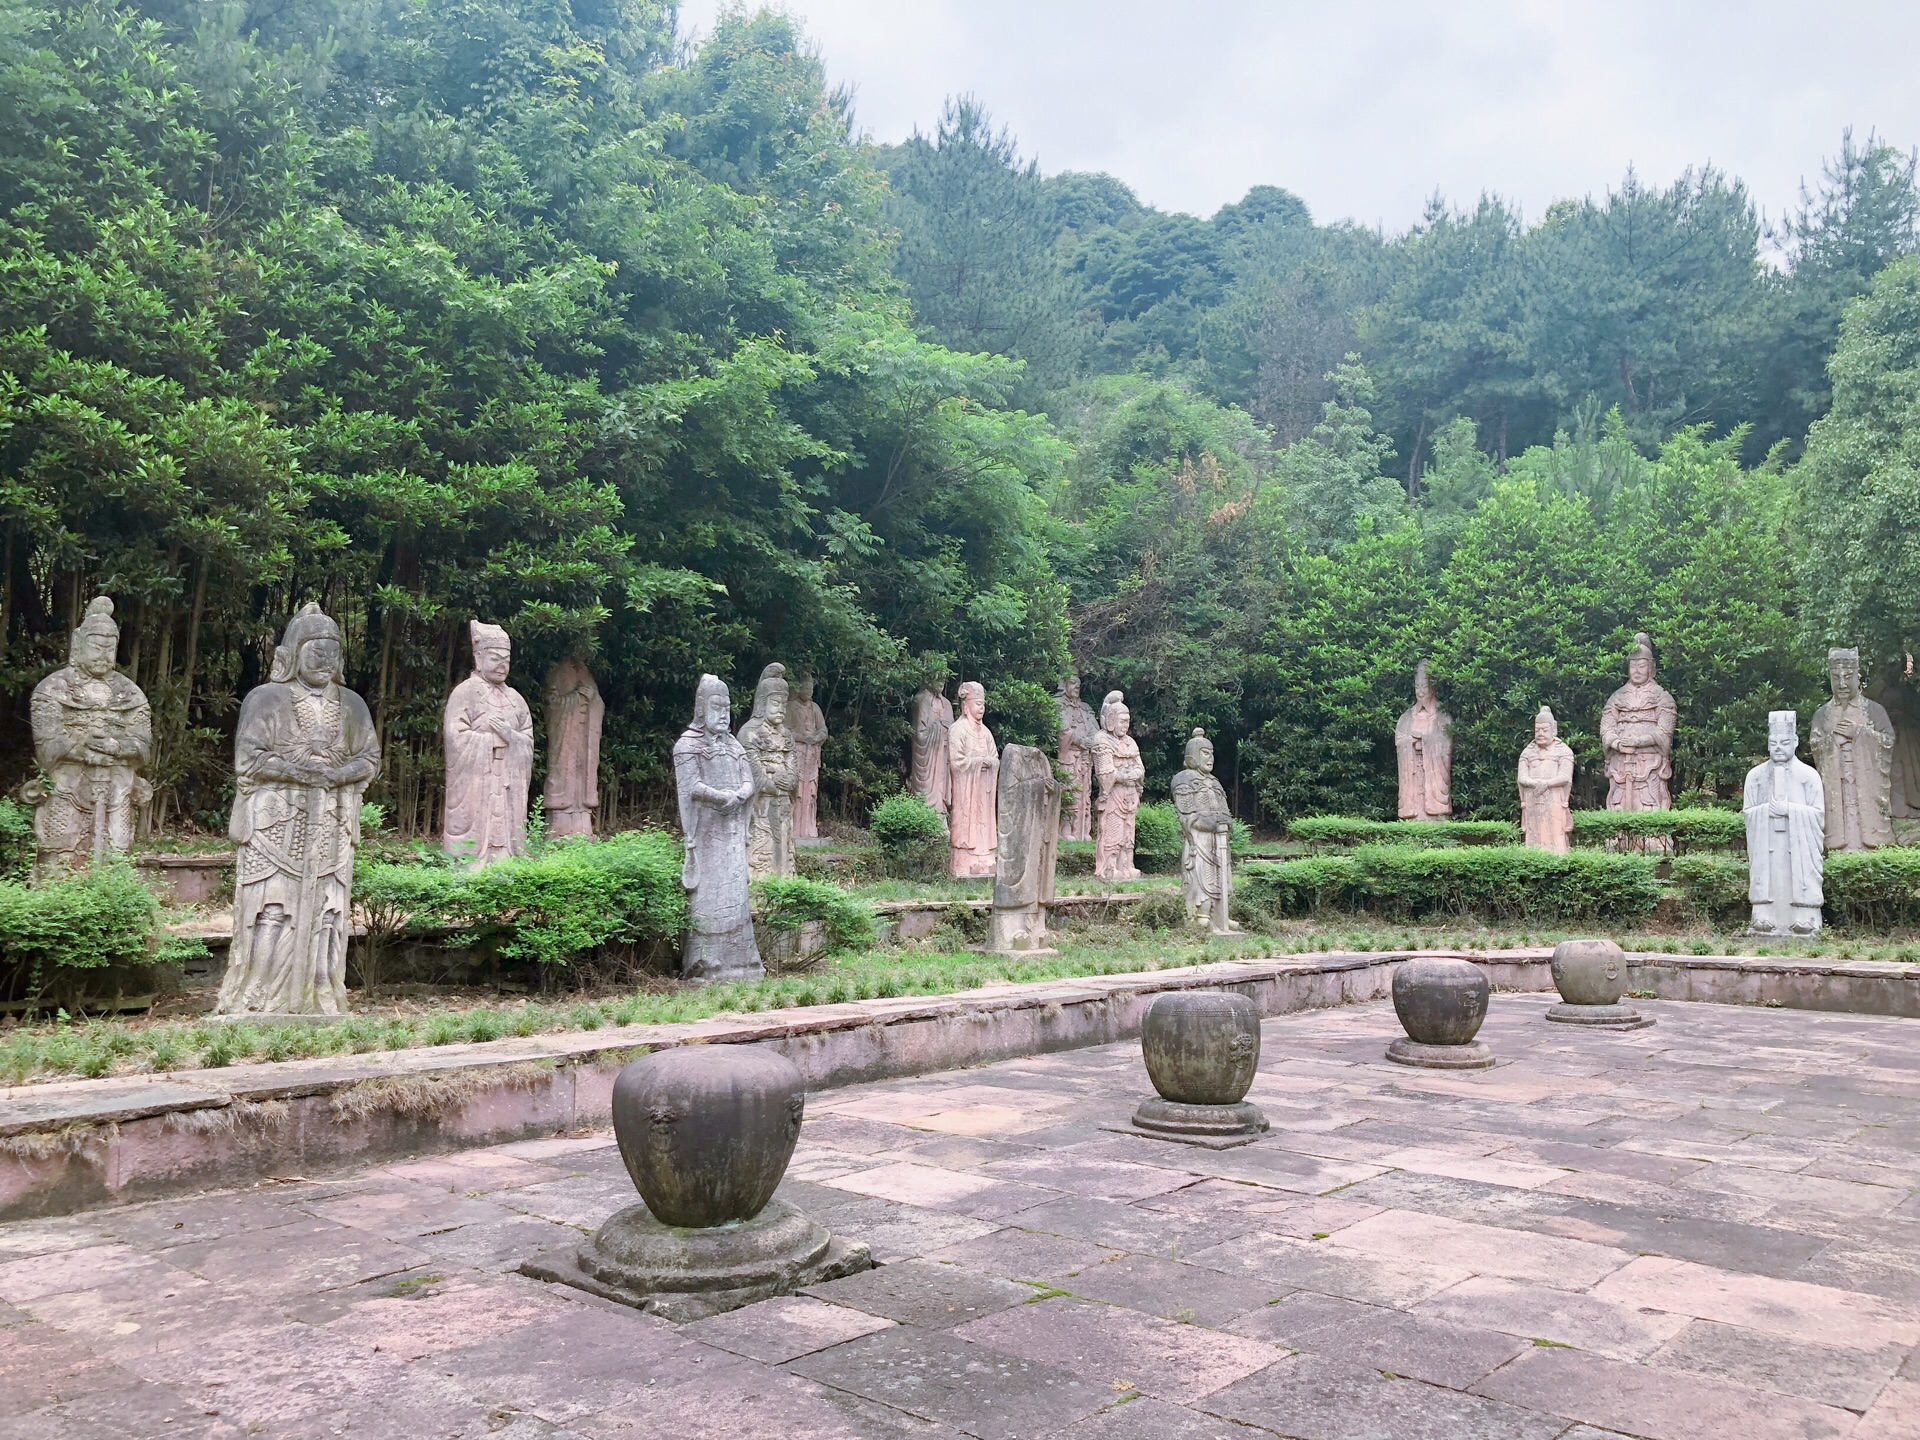 南宋石刻遗址公园the stone carving relic park of the southern